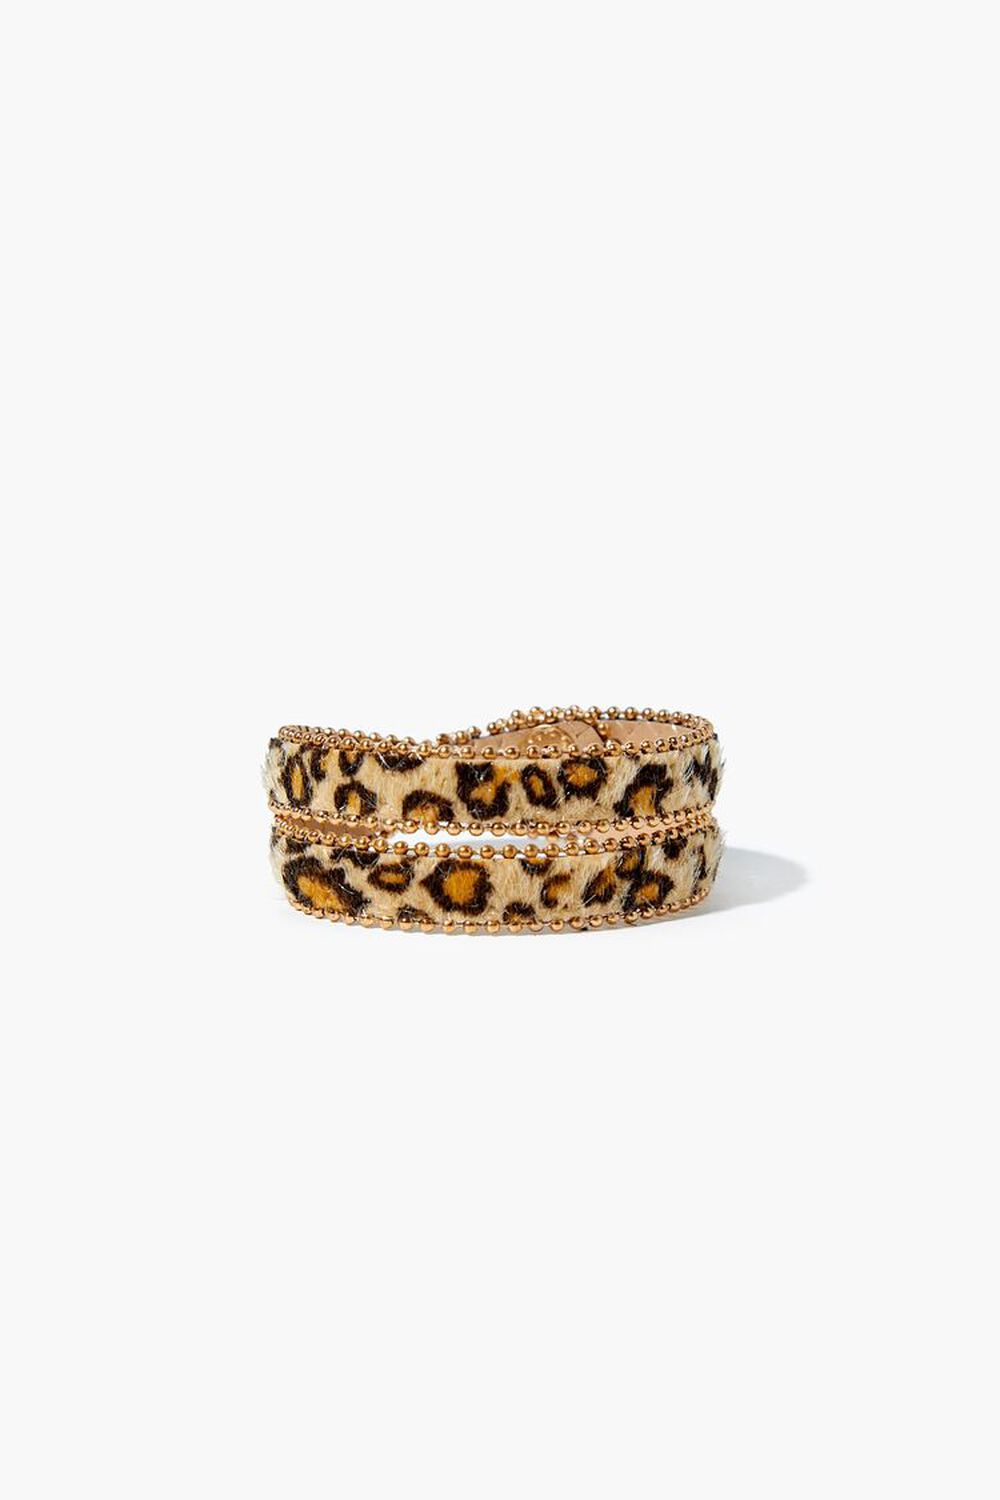 BROWN/GOLD Leopard Print Wrap Bracelet, image 1